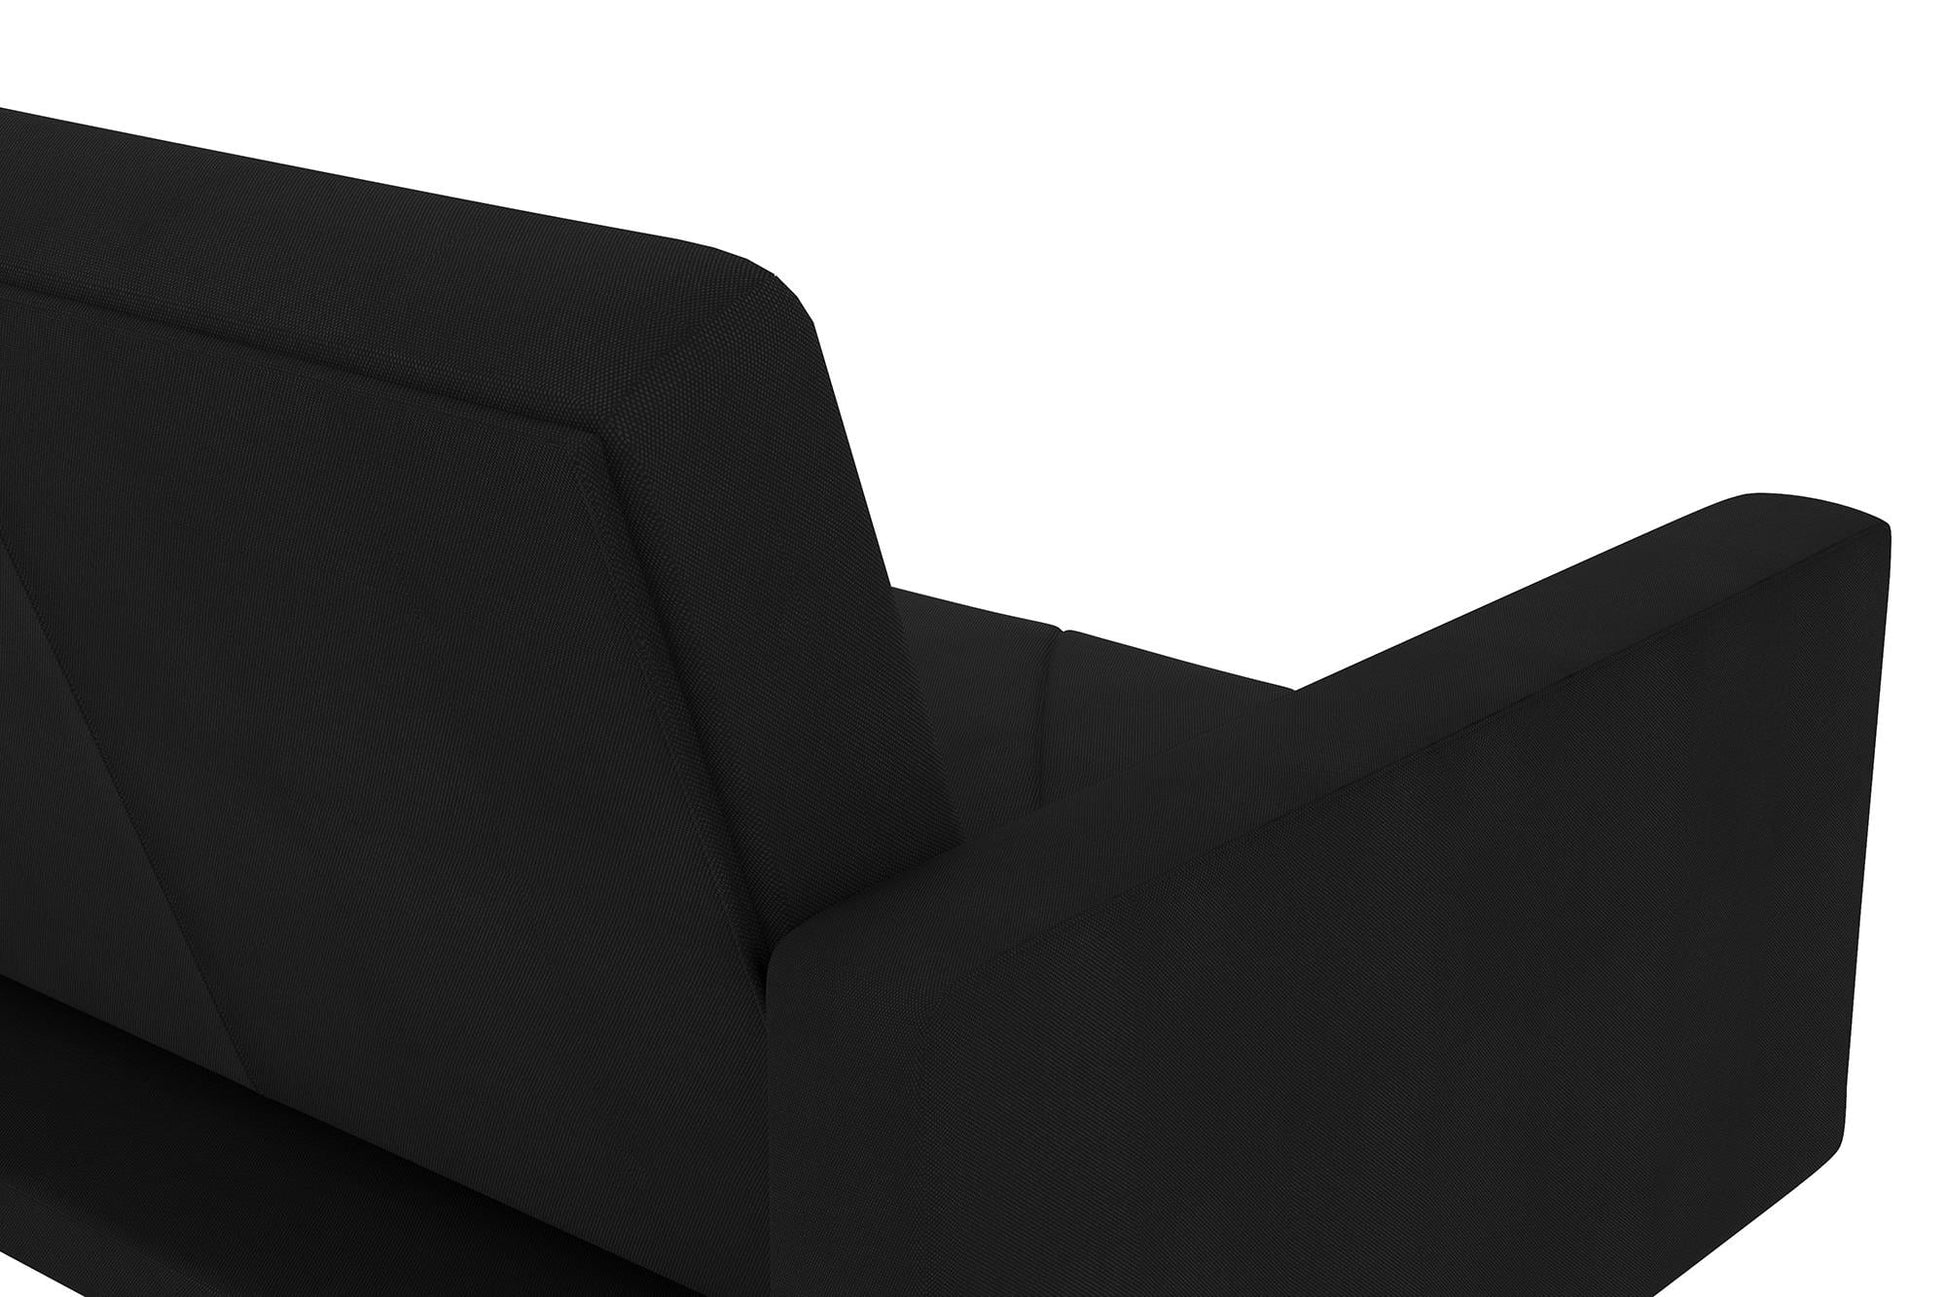 Paxson Futon, Black Linen - Design By Technique